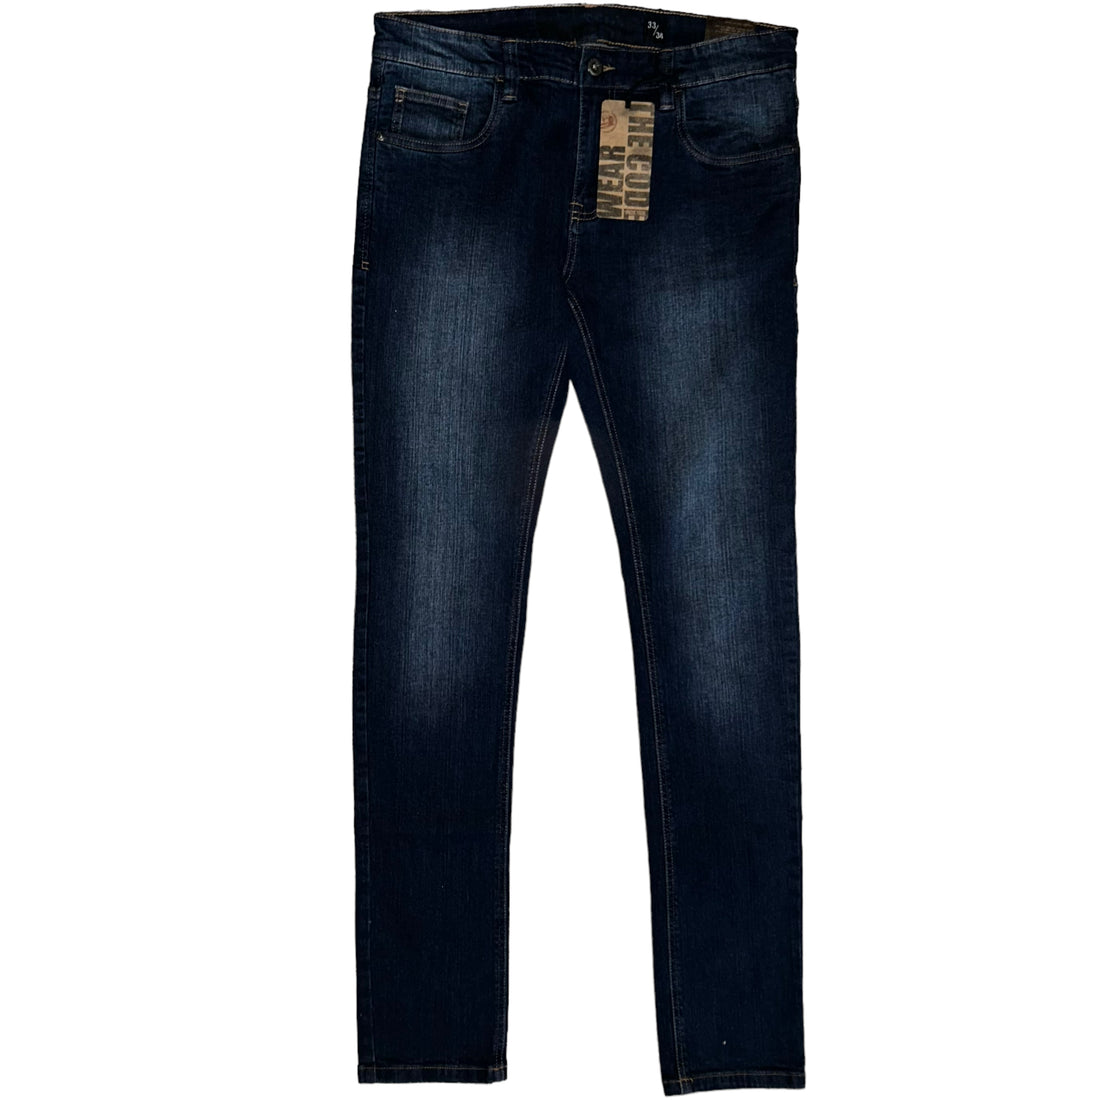 Jeans Indicode (M 33 USA)